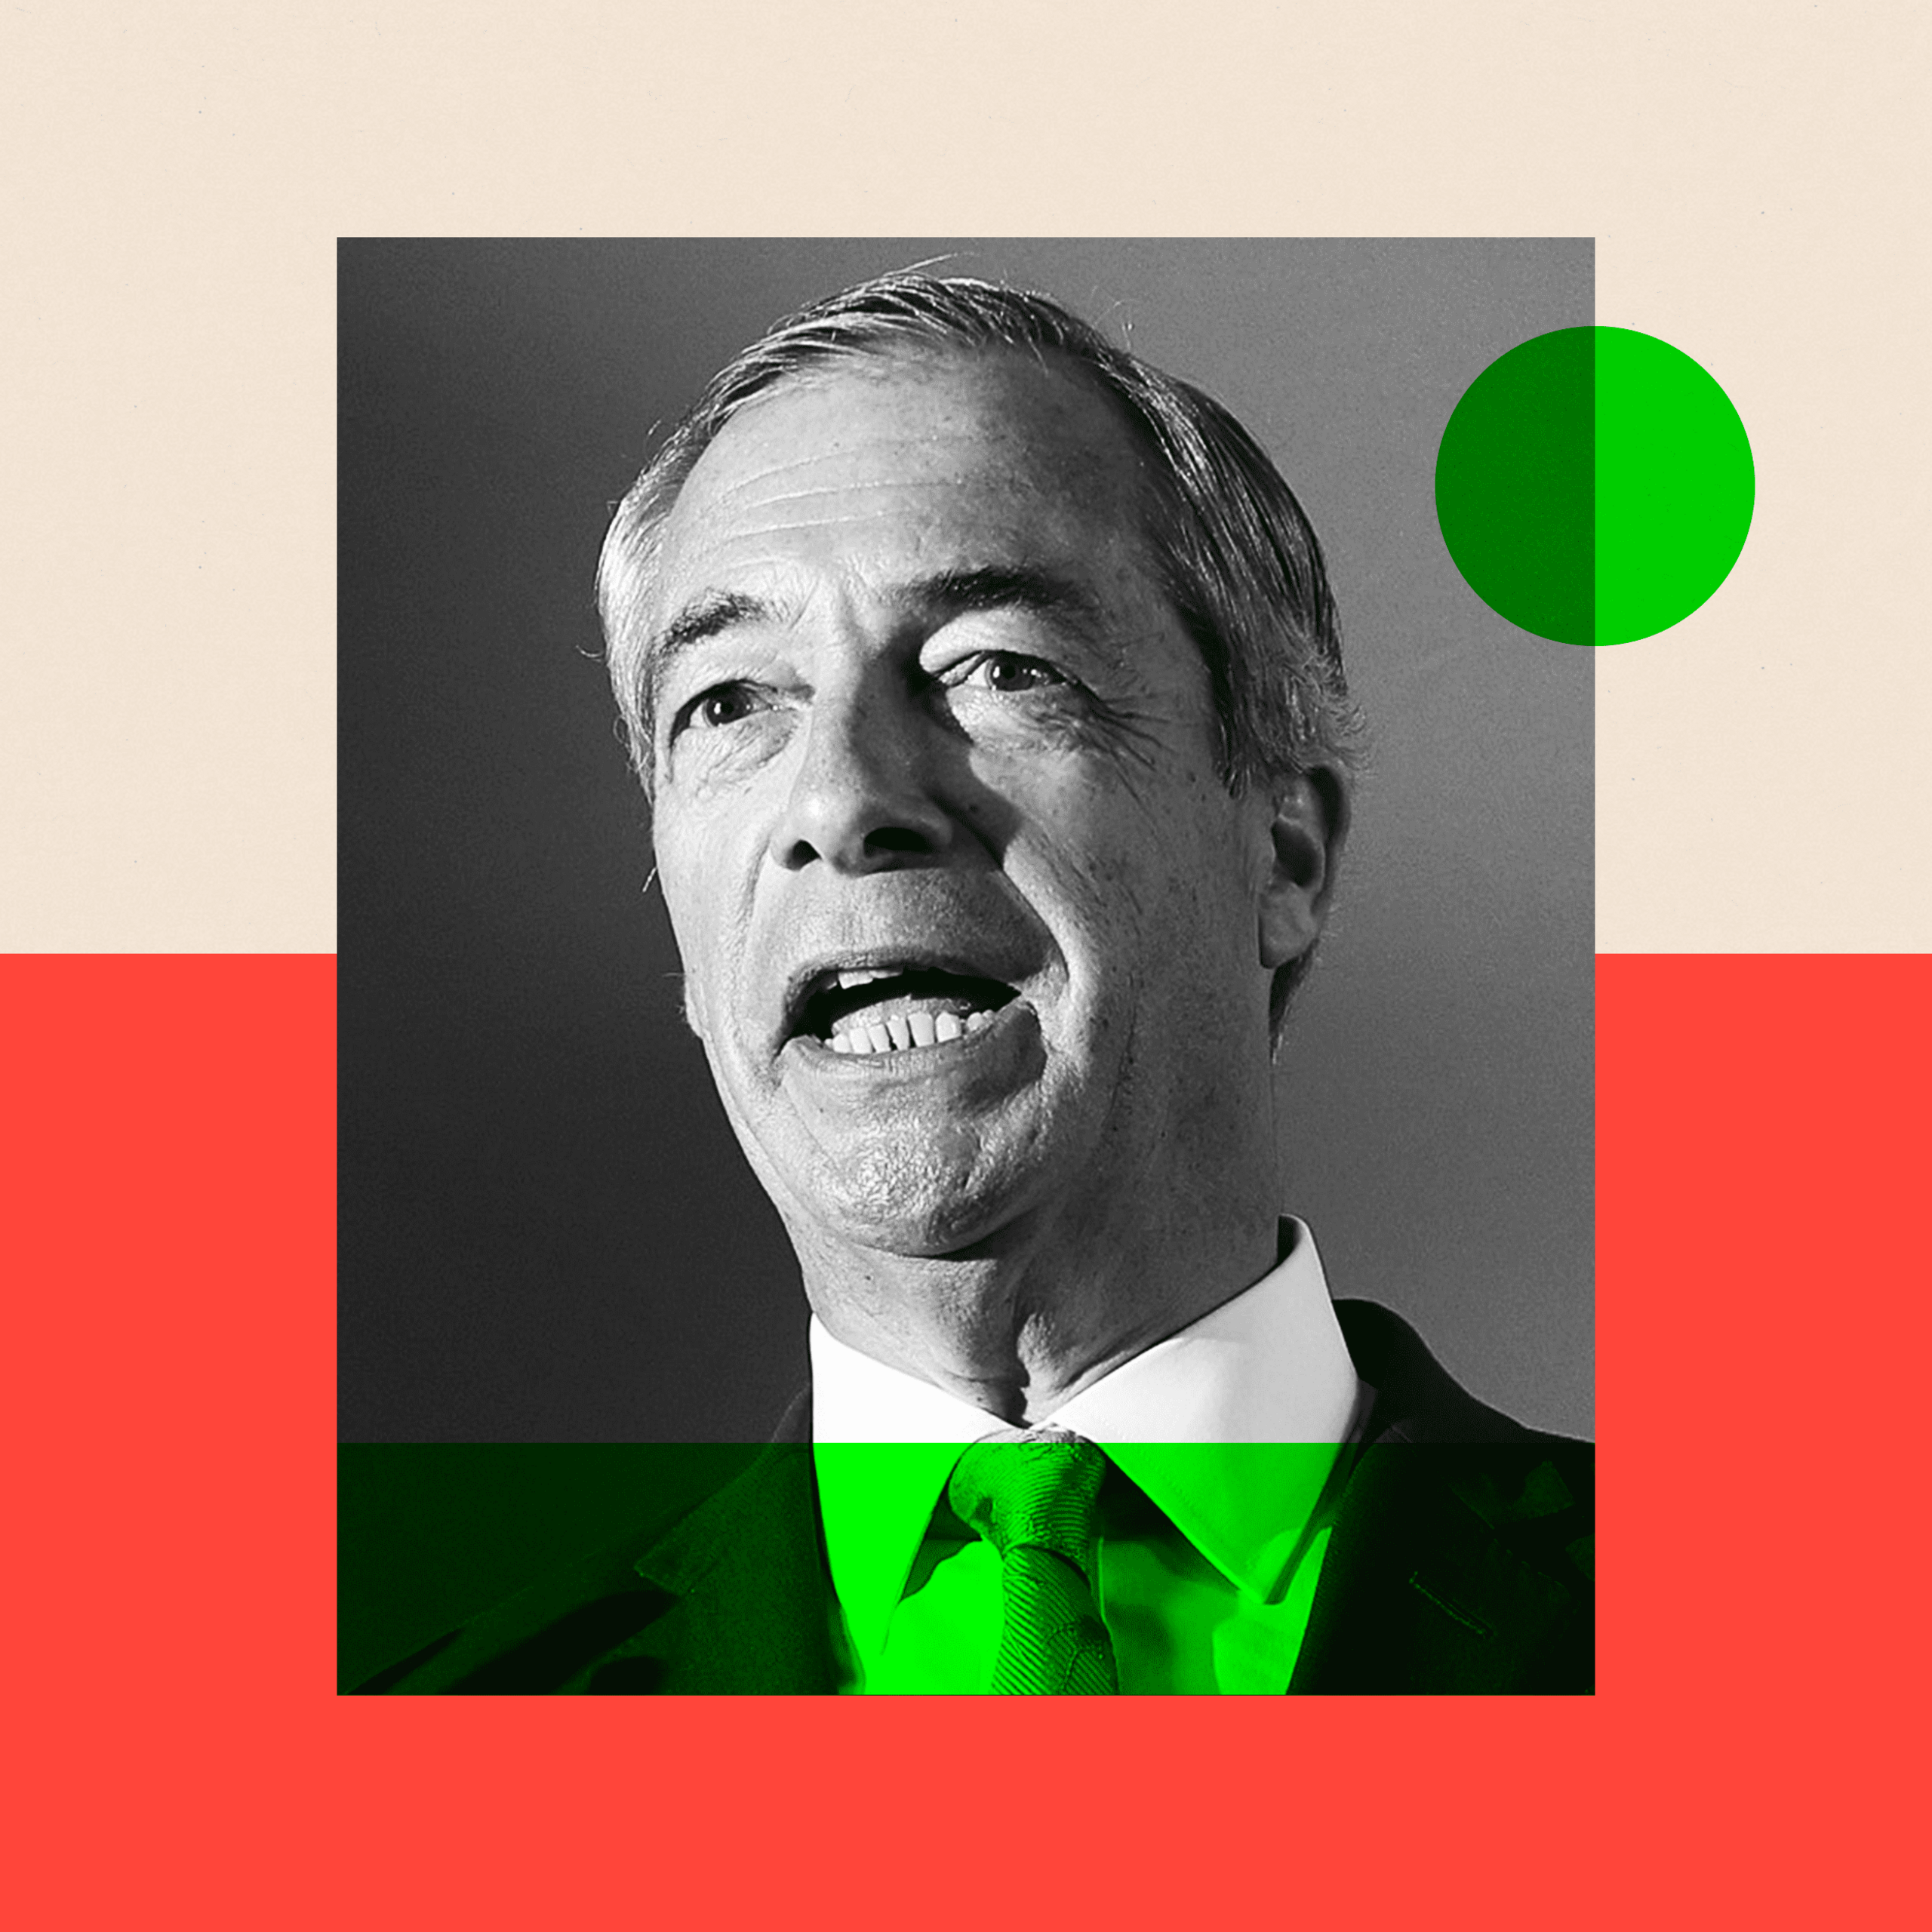 A treated photo of Nigel Farage